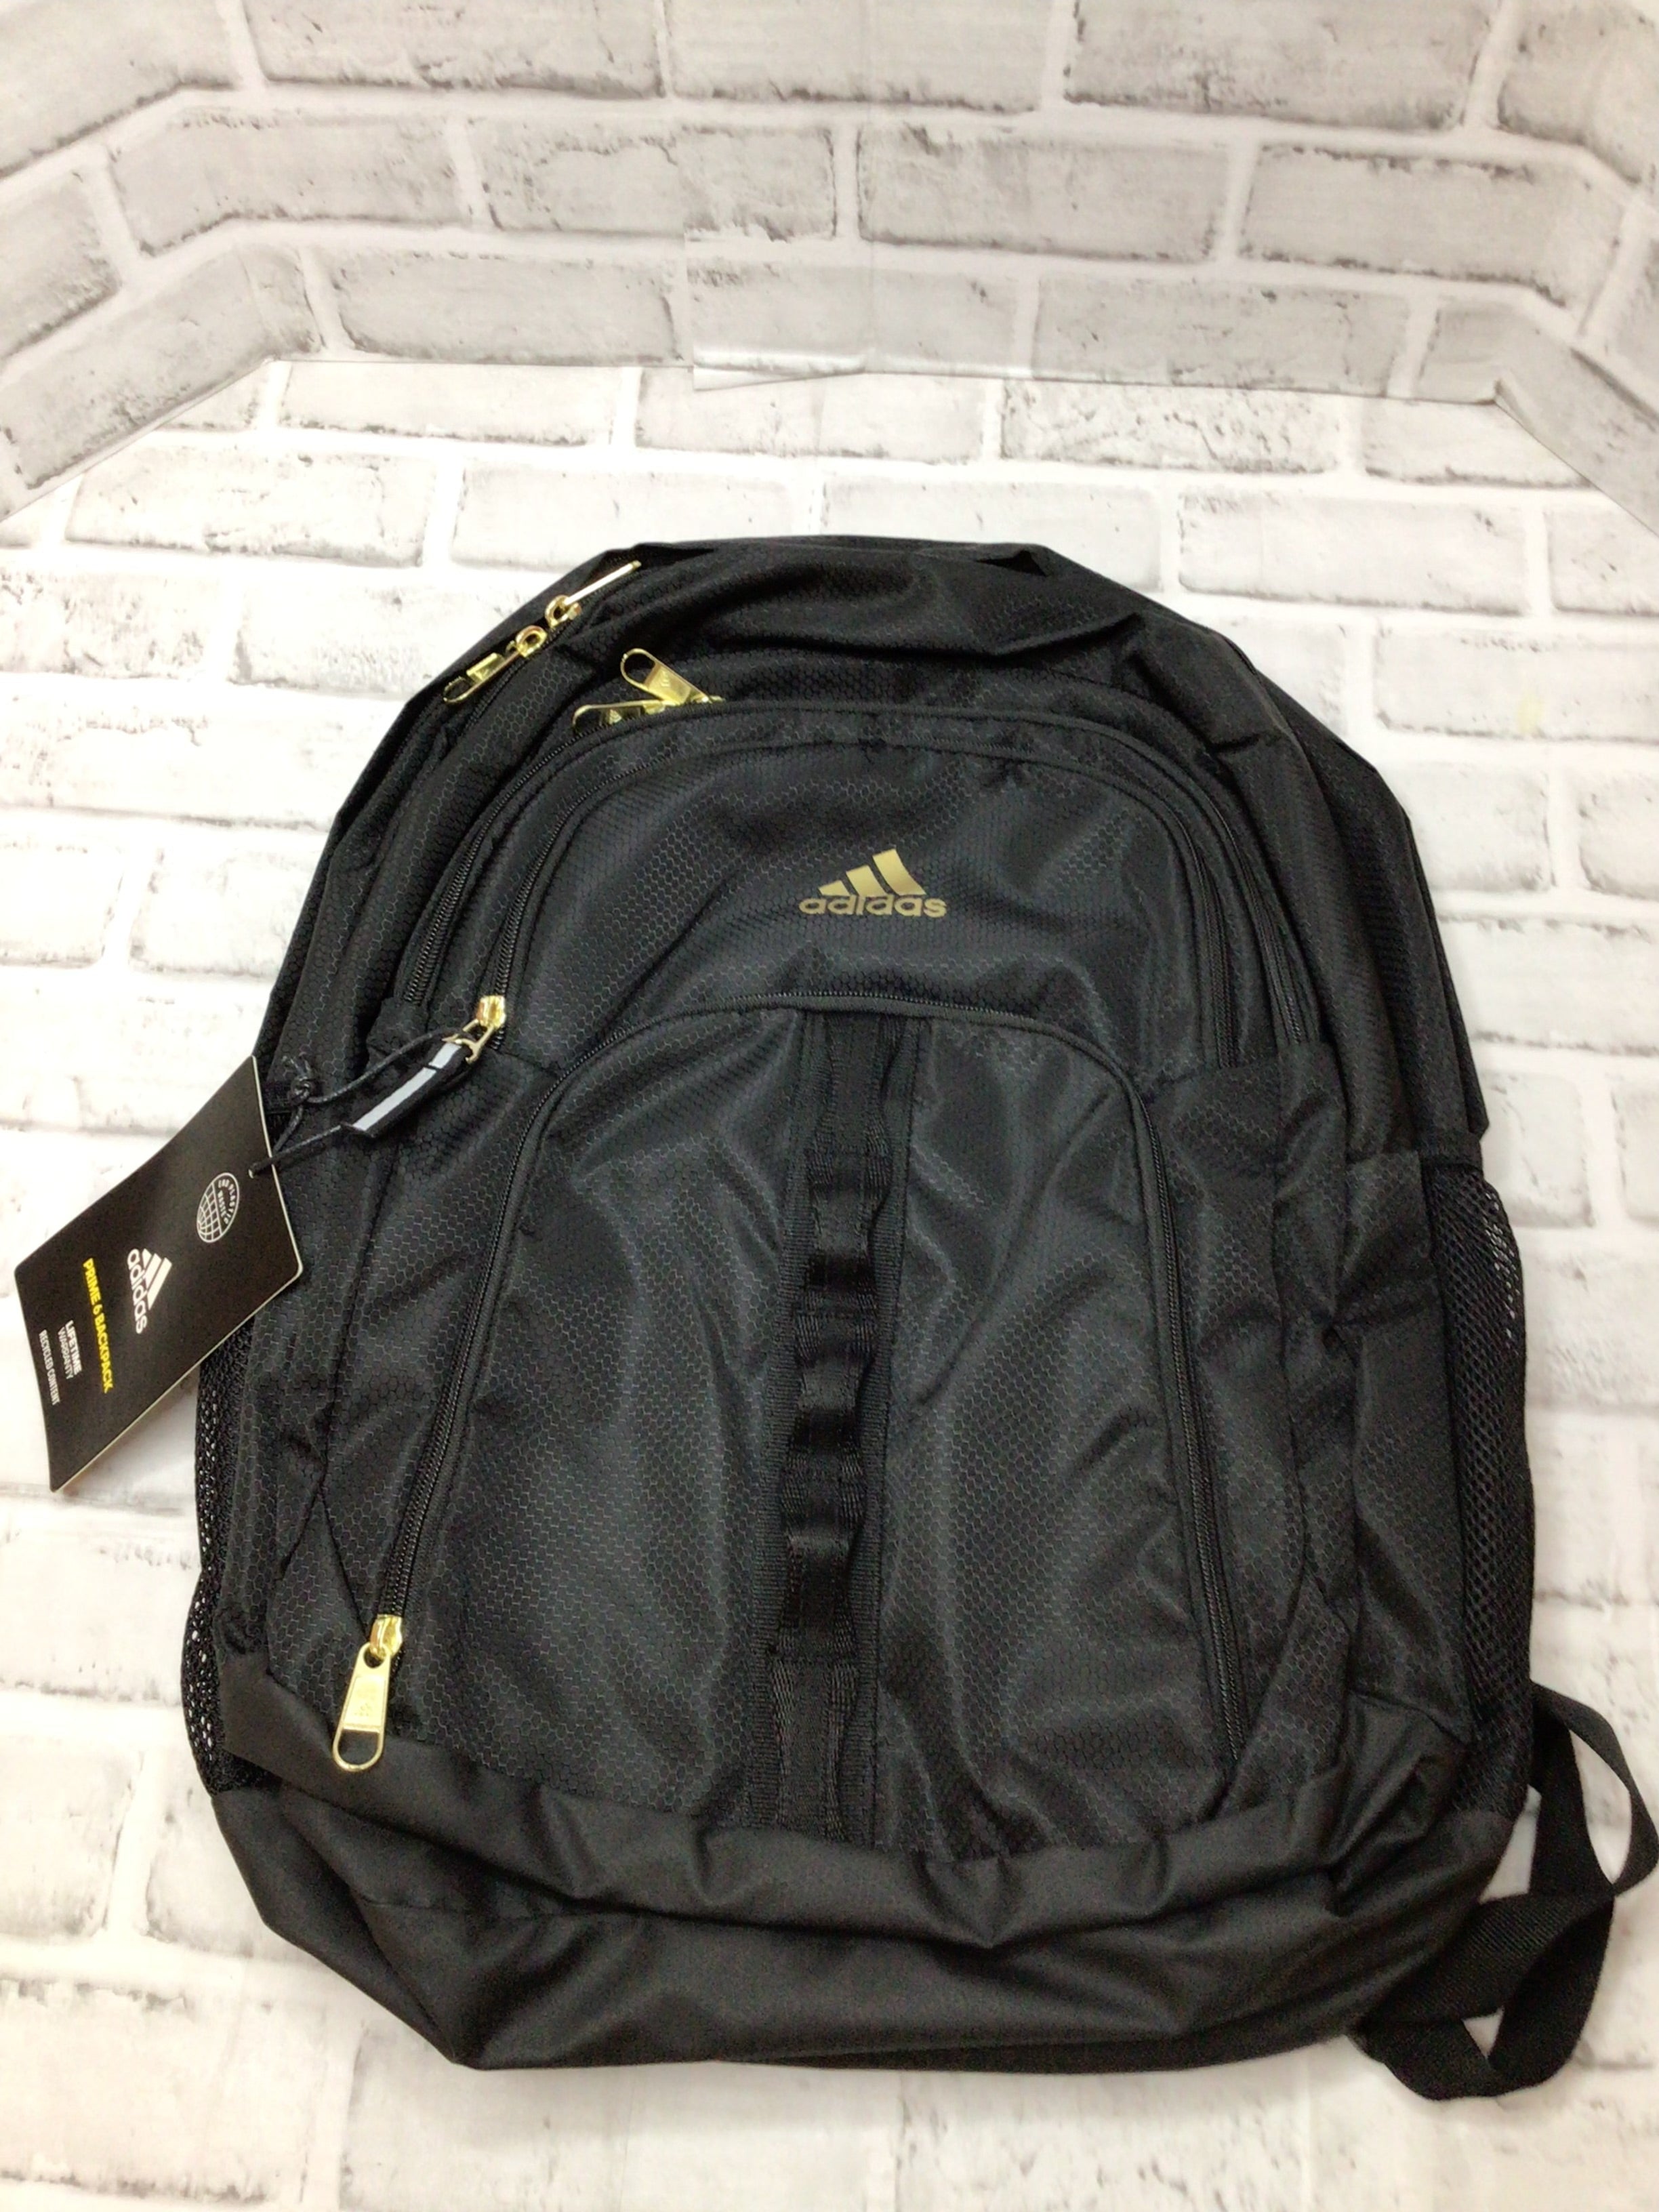 adidas Unisex Prime 6 Backpack, Black/Gold Metallic (8095832211694)